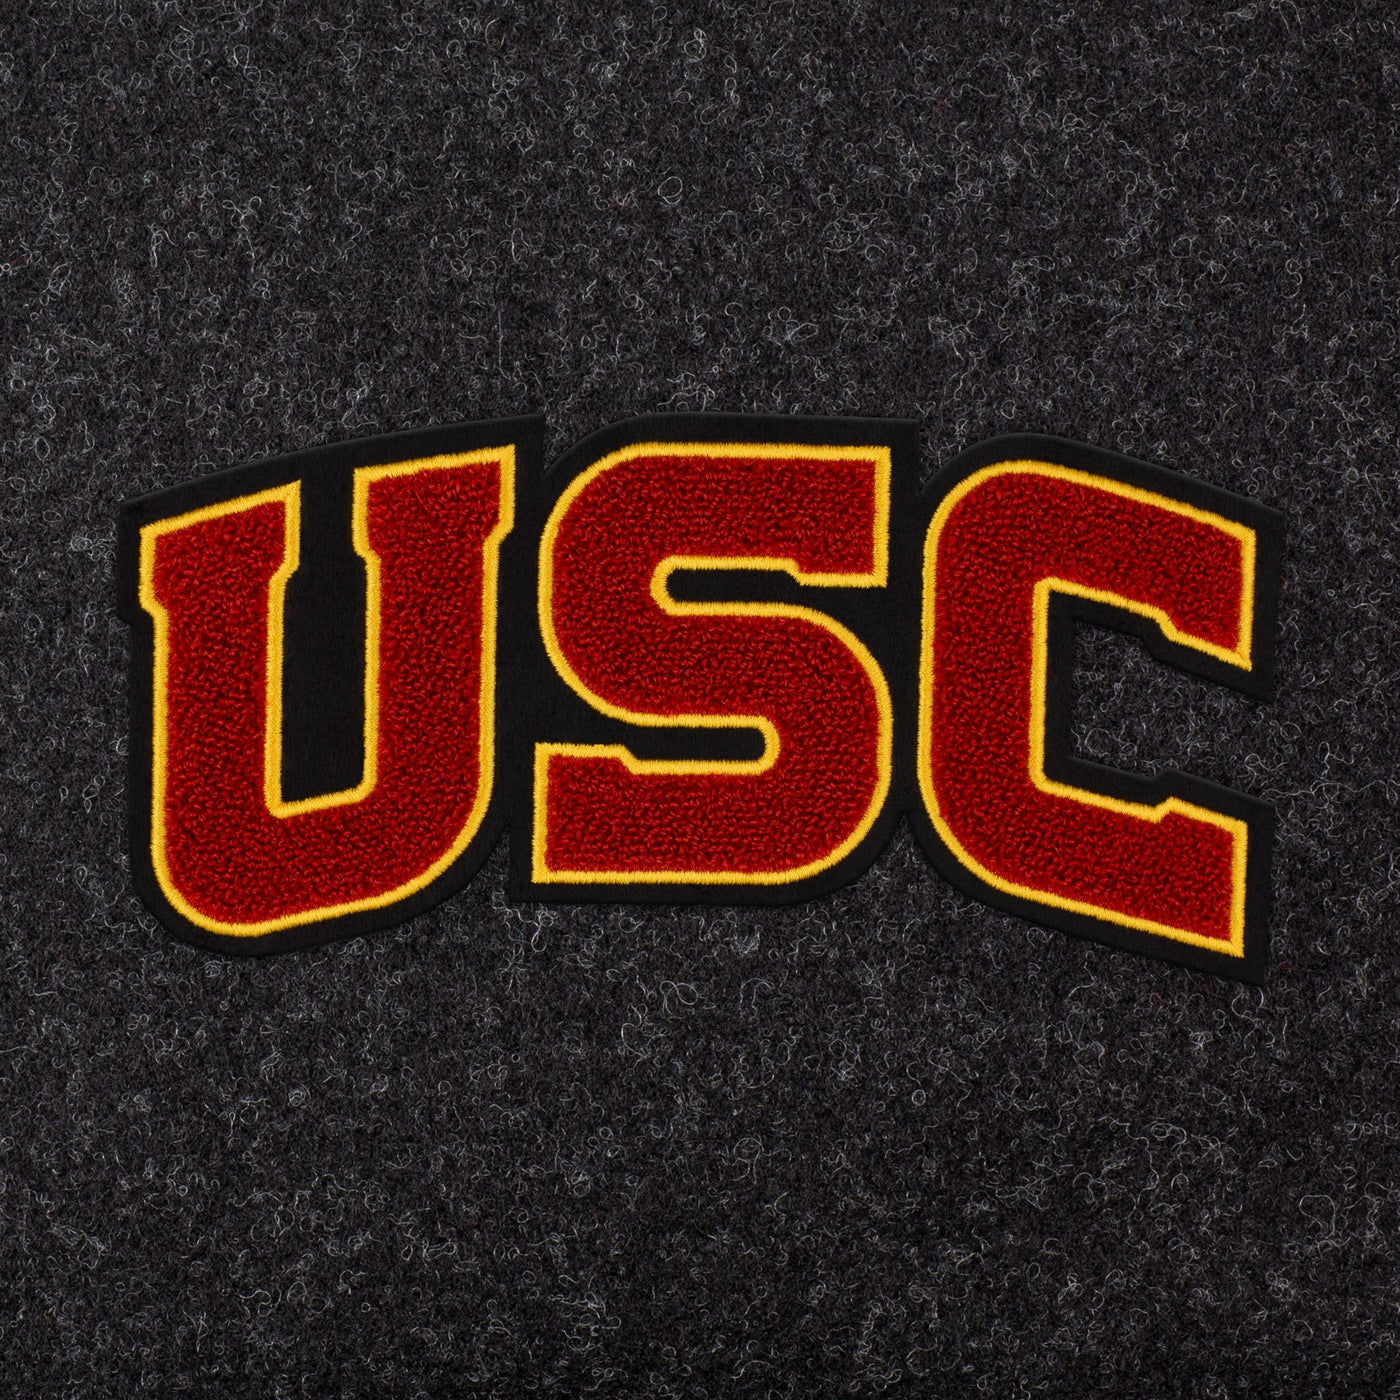 USC Trojans "USC" Tote